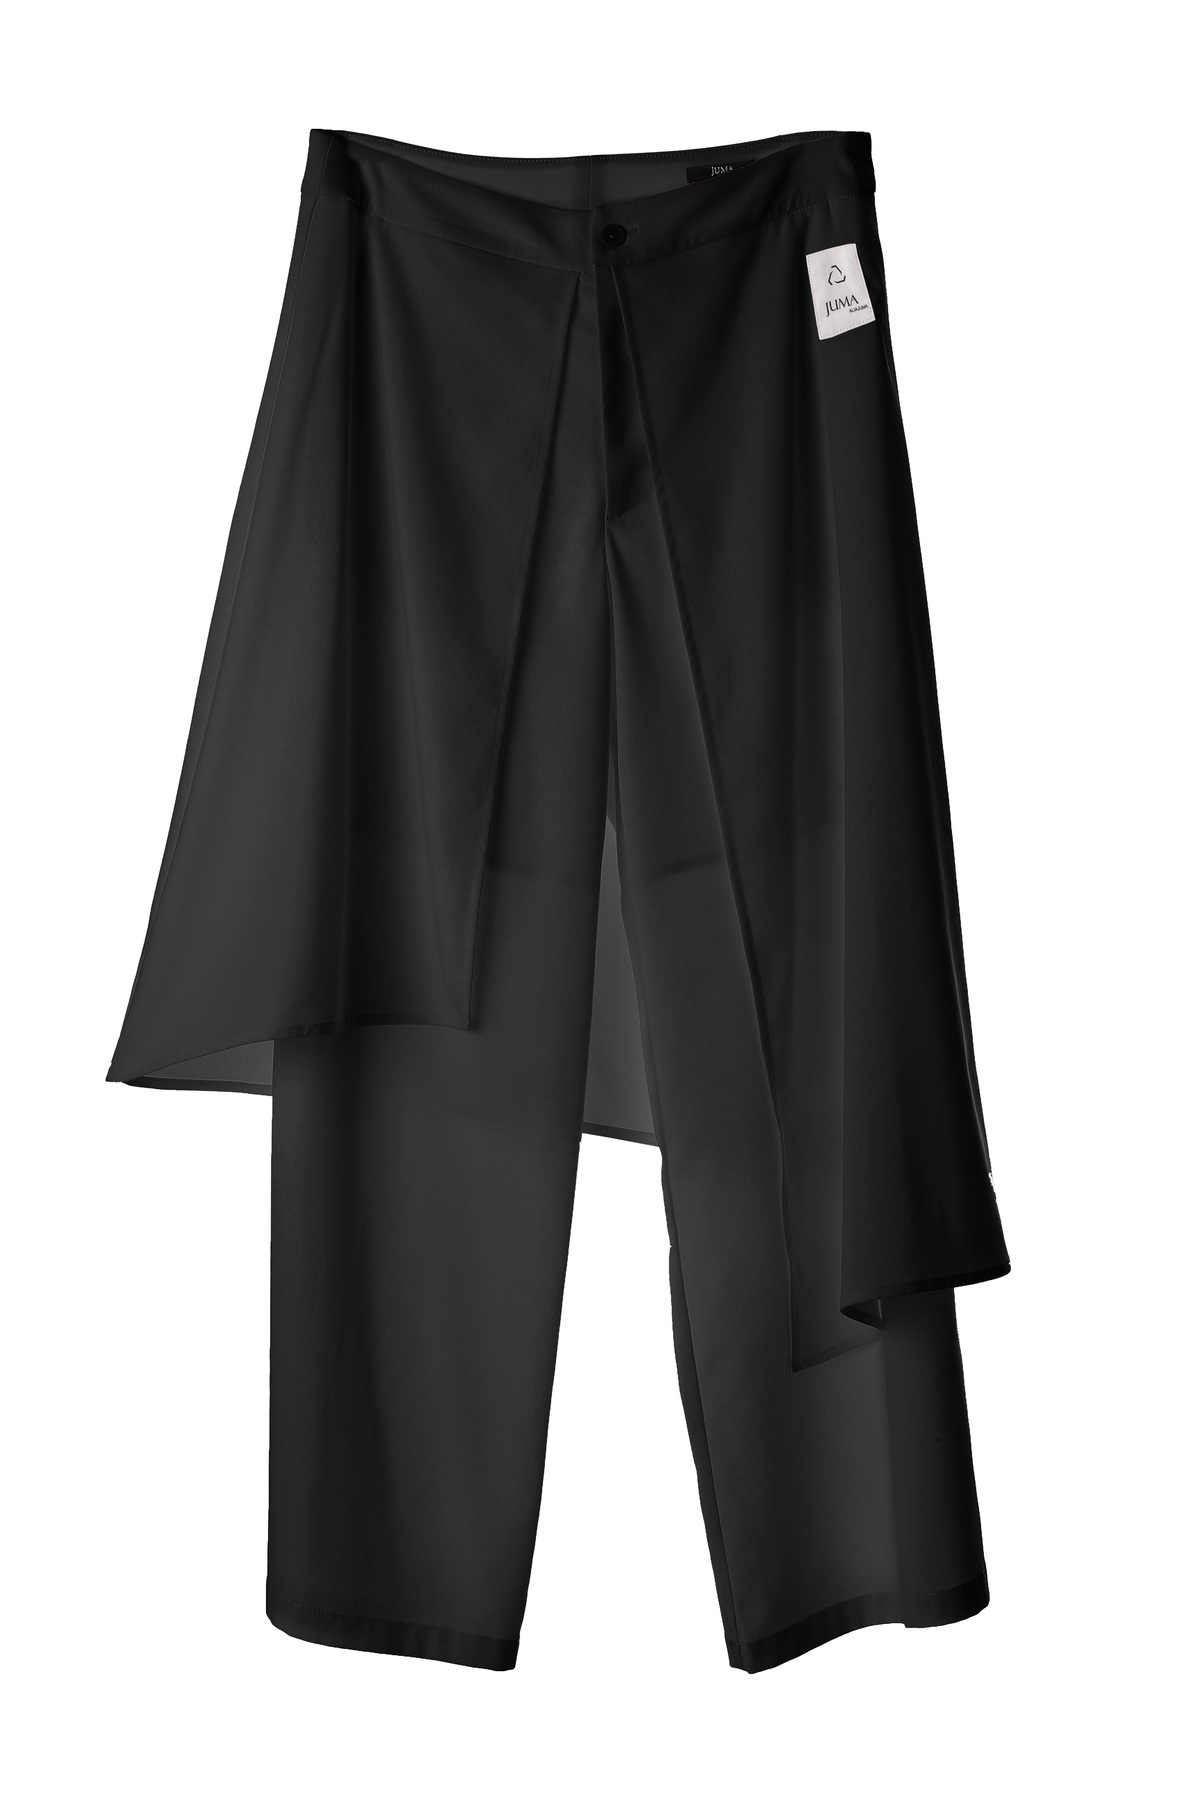 Zayu 印花直筒裤 - 8 个再生水瓶 - 黑色｜Zayu Printed Straight Pants - 8 Recycled Water Bottles - Black